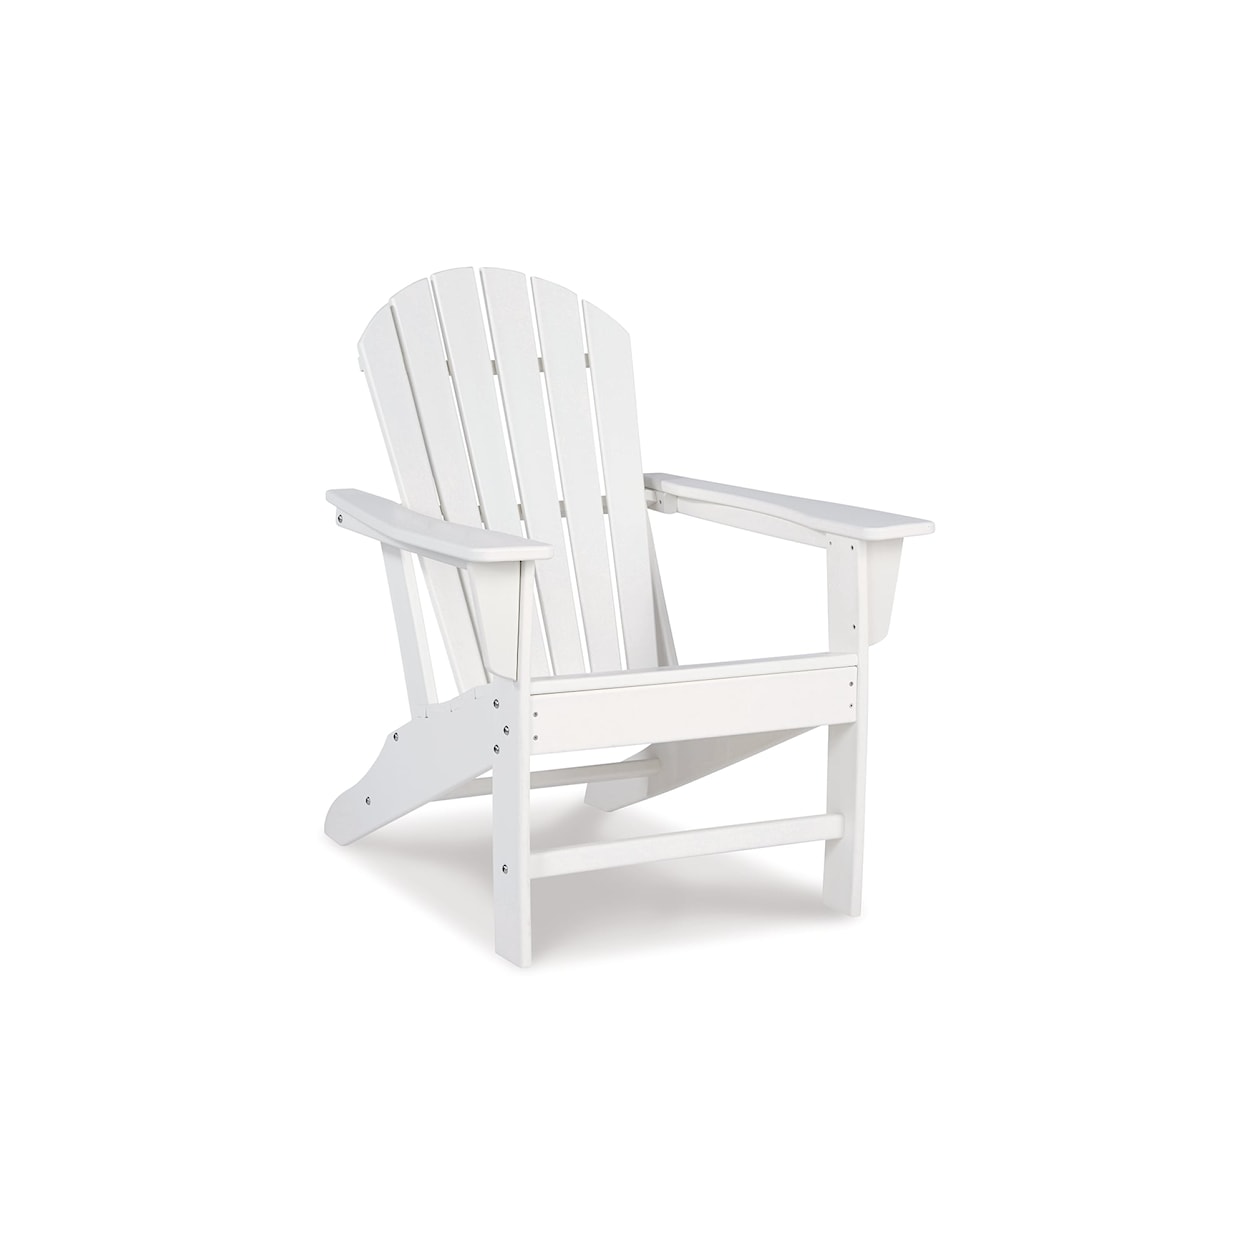 Ashley Signature Design Sundown Treasure Adirondack Chair with End Table